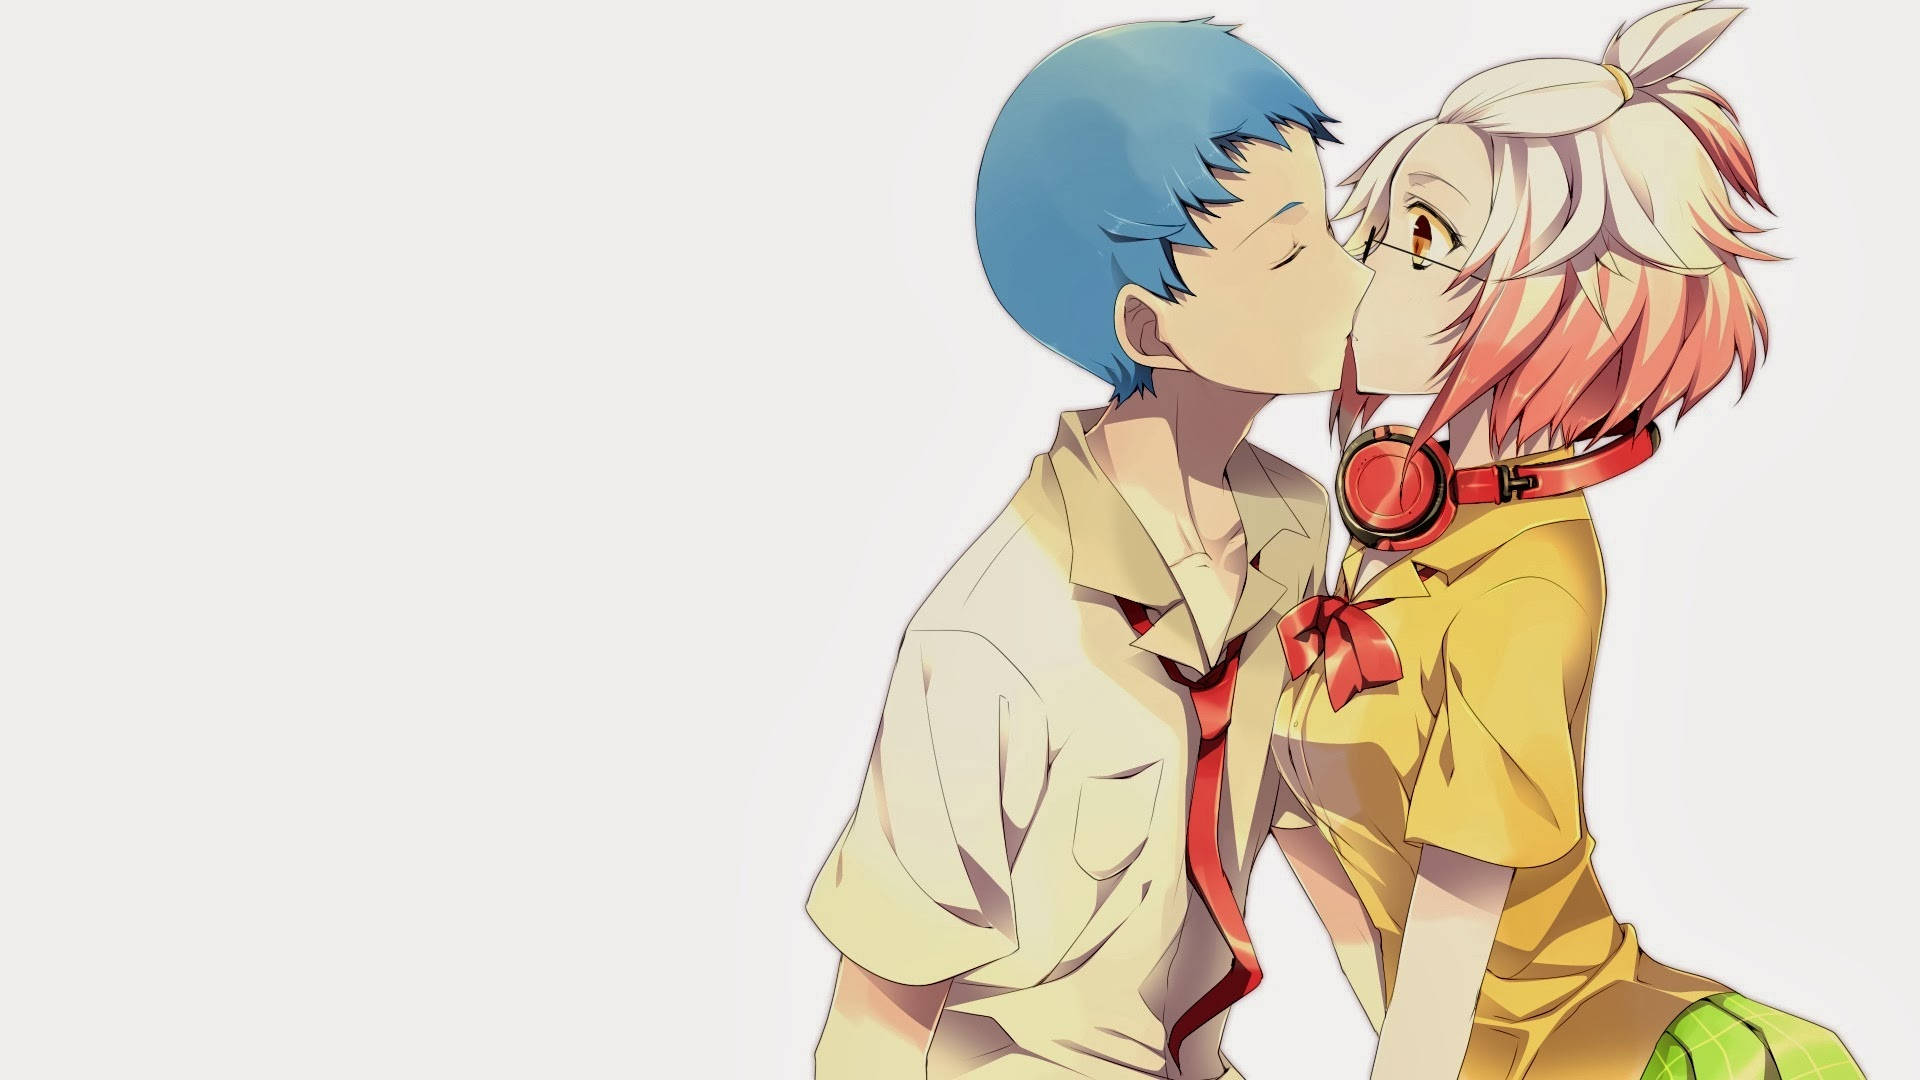 Free Anime Couple Kiss Wallpaper Downloads, [100+] Anime Couple Kiss  Wallpapers for FREE 